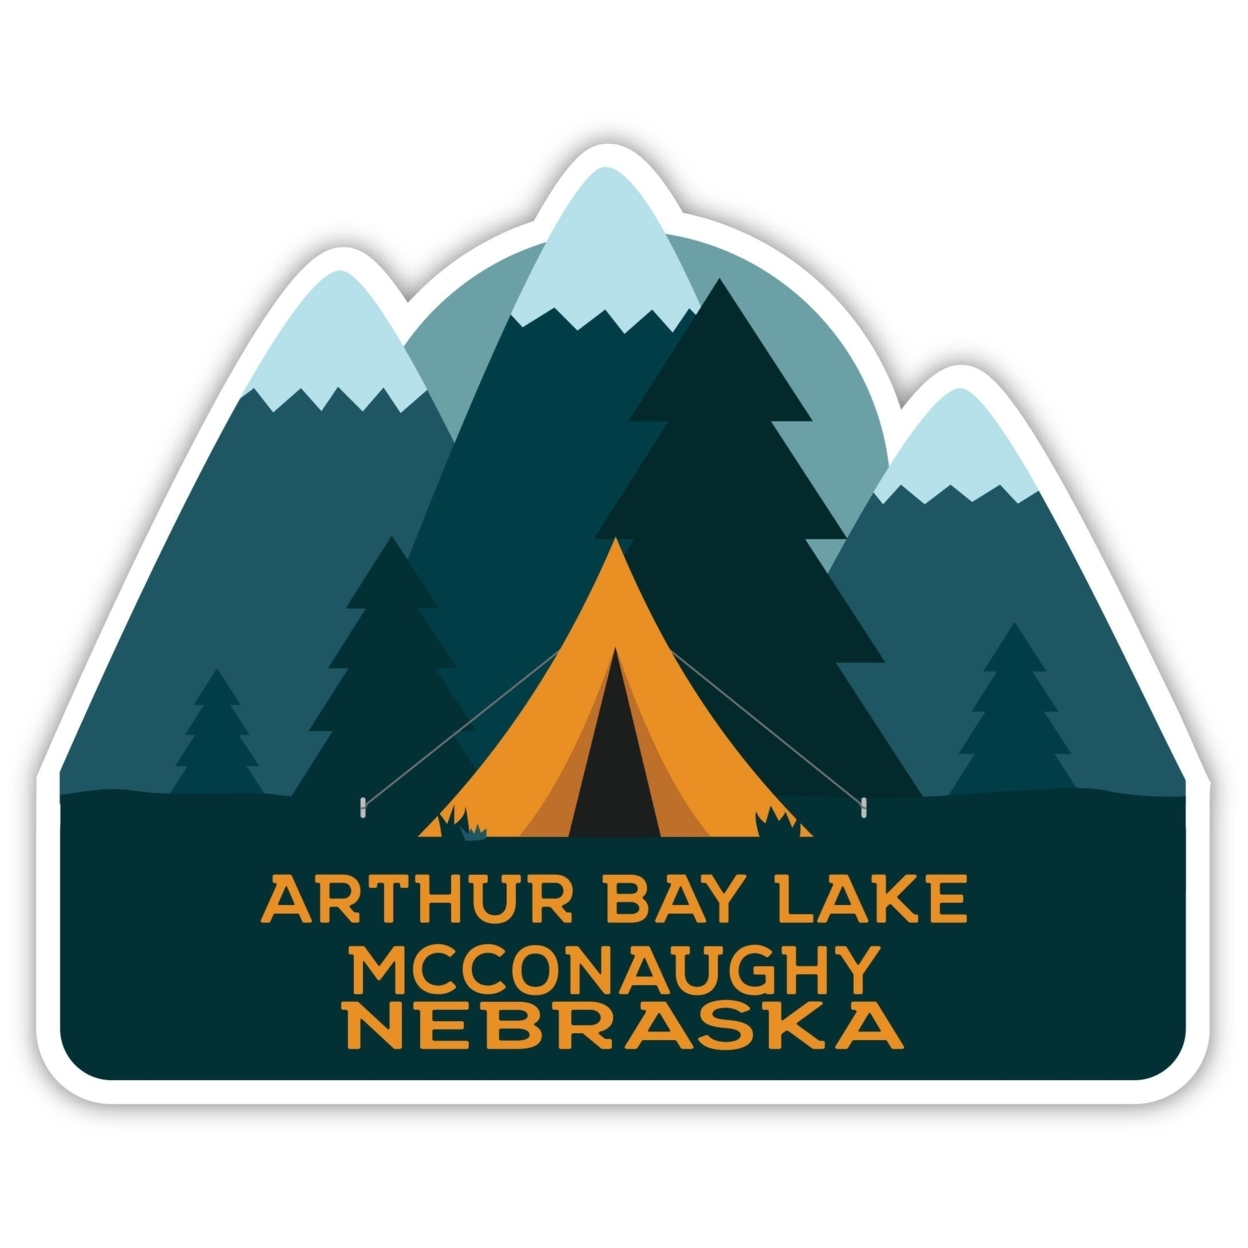 Arthur Bay Lake Mcconaughy Nebraska Souvenir Decorative Stickers (Choose Theme And Size) - 4-Pack, 2-Inch, Tent